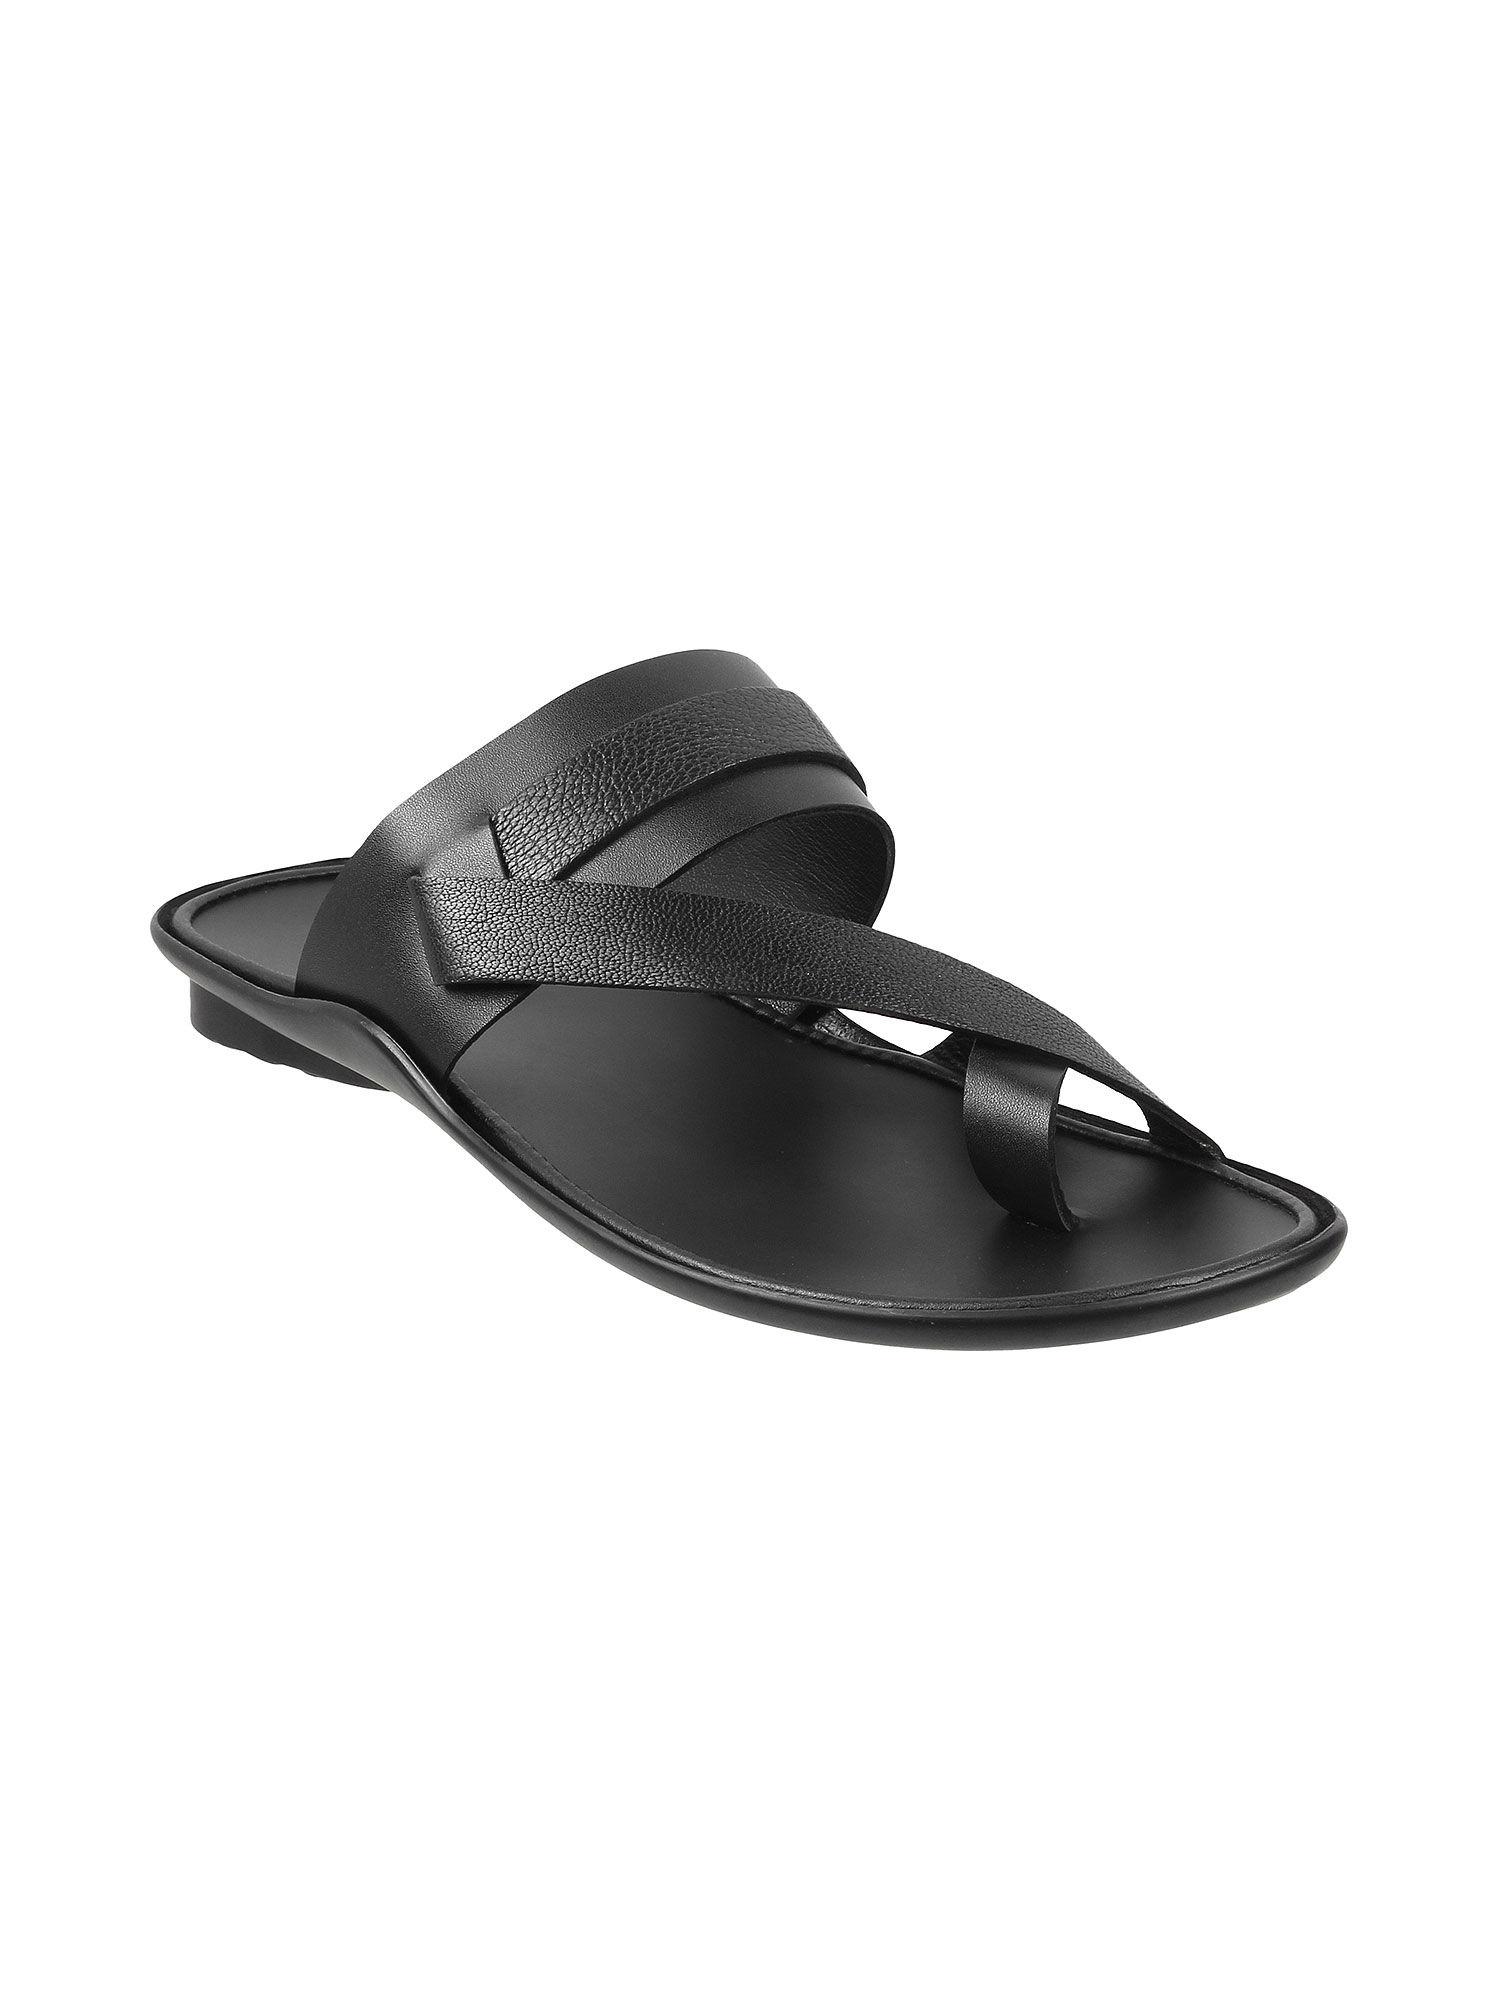 mens black flat chappalsmochi solid black sandals